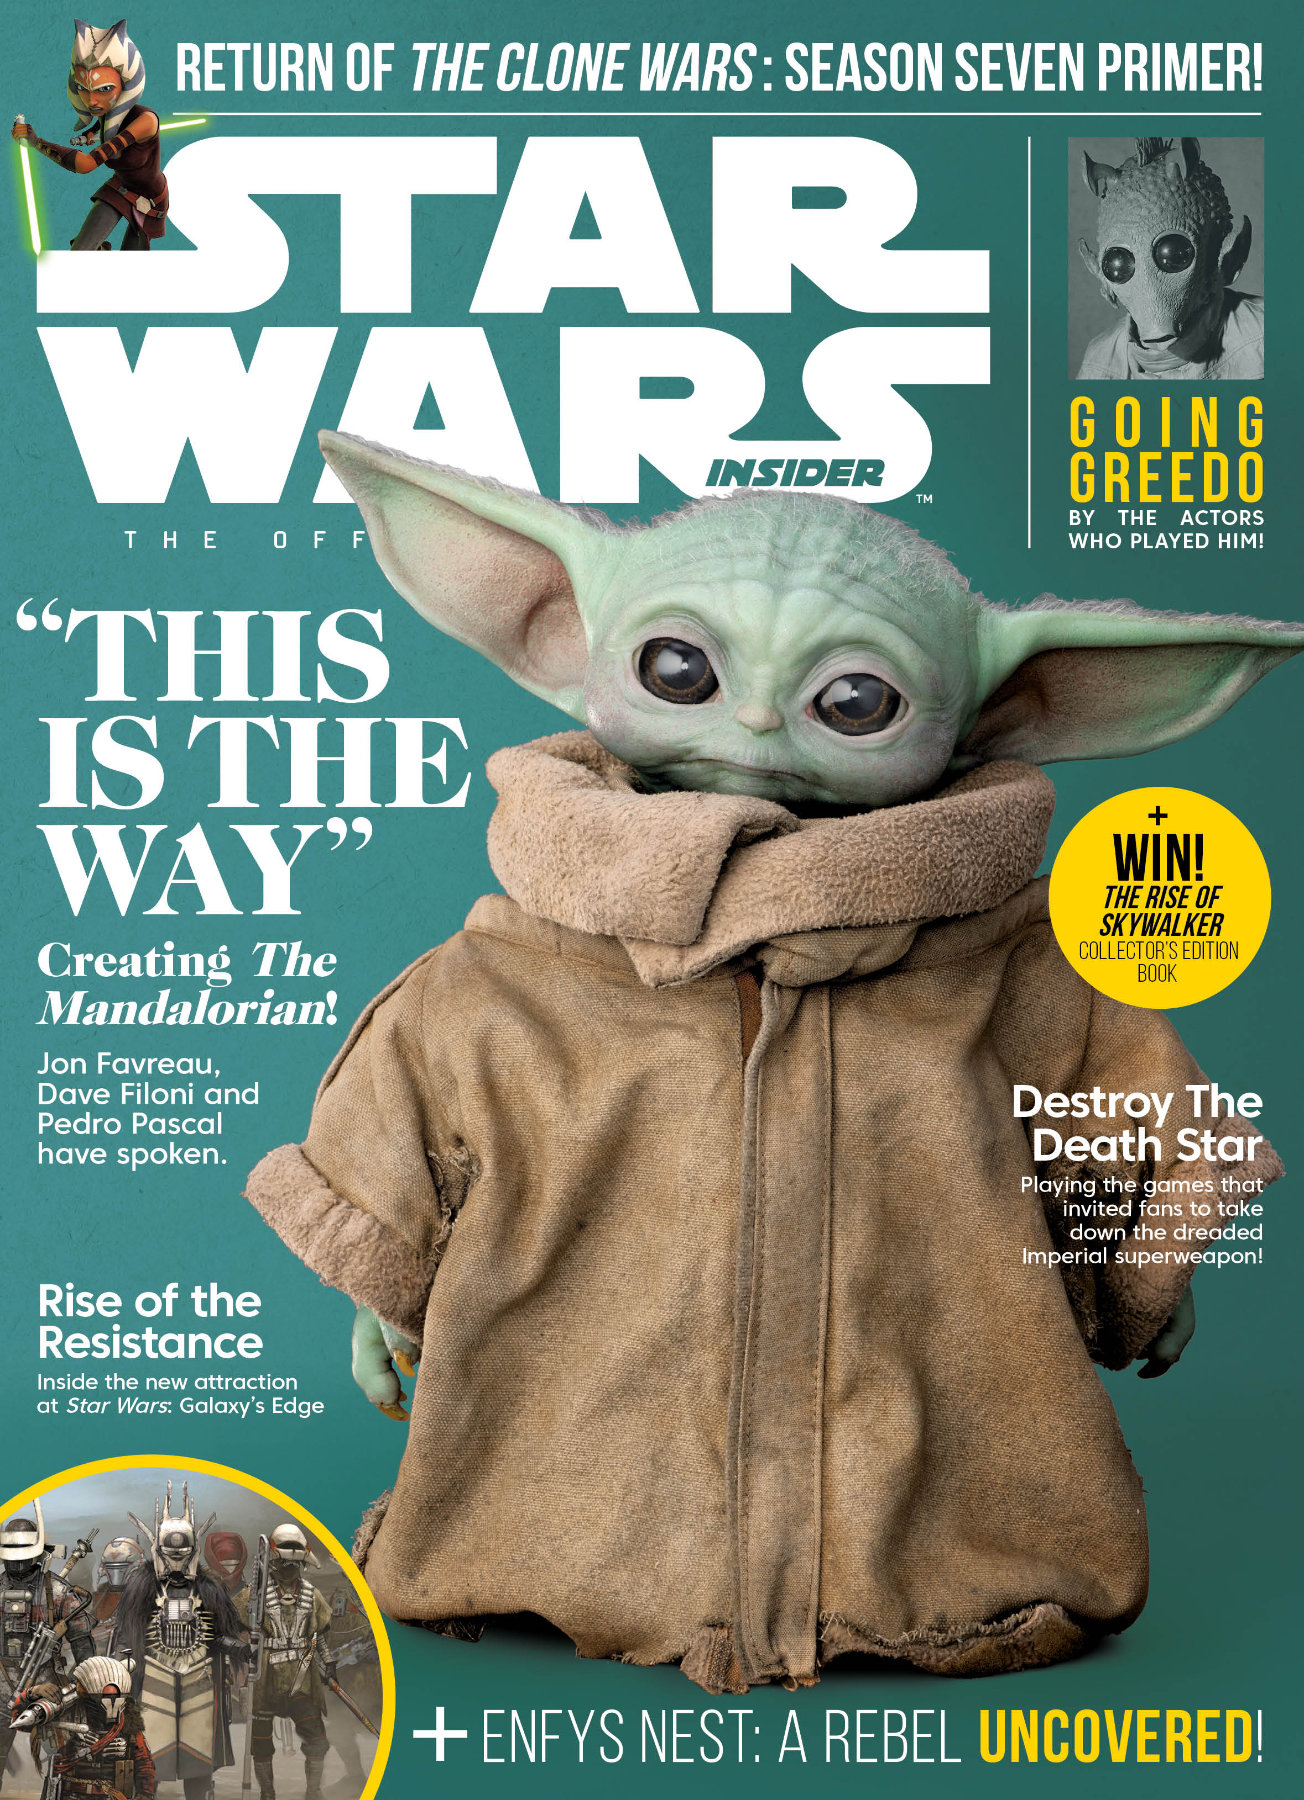 Star Wars Insider #195 February/March 2020